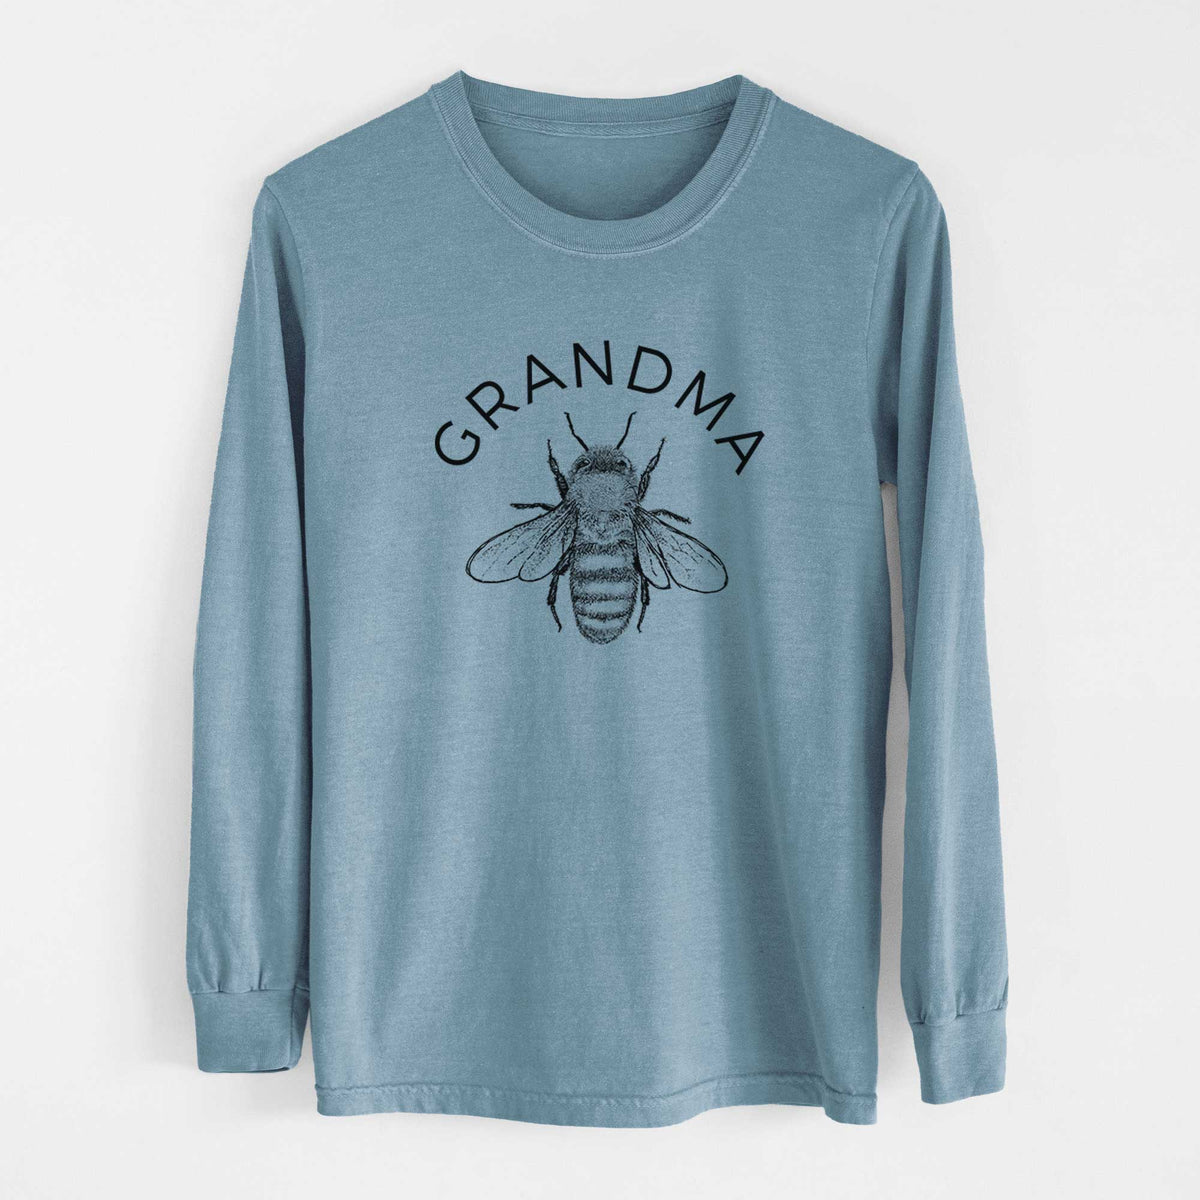 Grandma Bee - Heavyweight 100% Cotton Long Sleeve